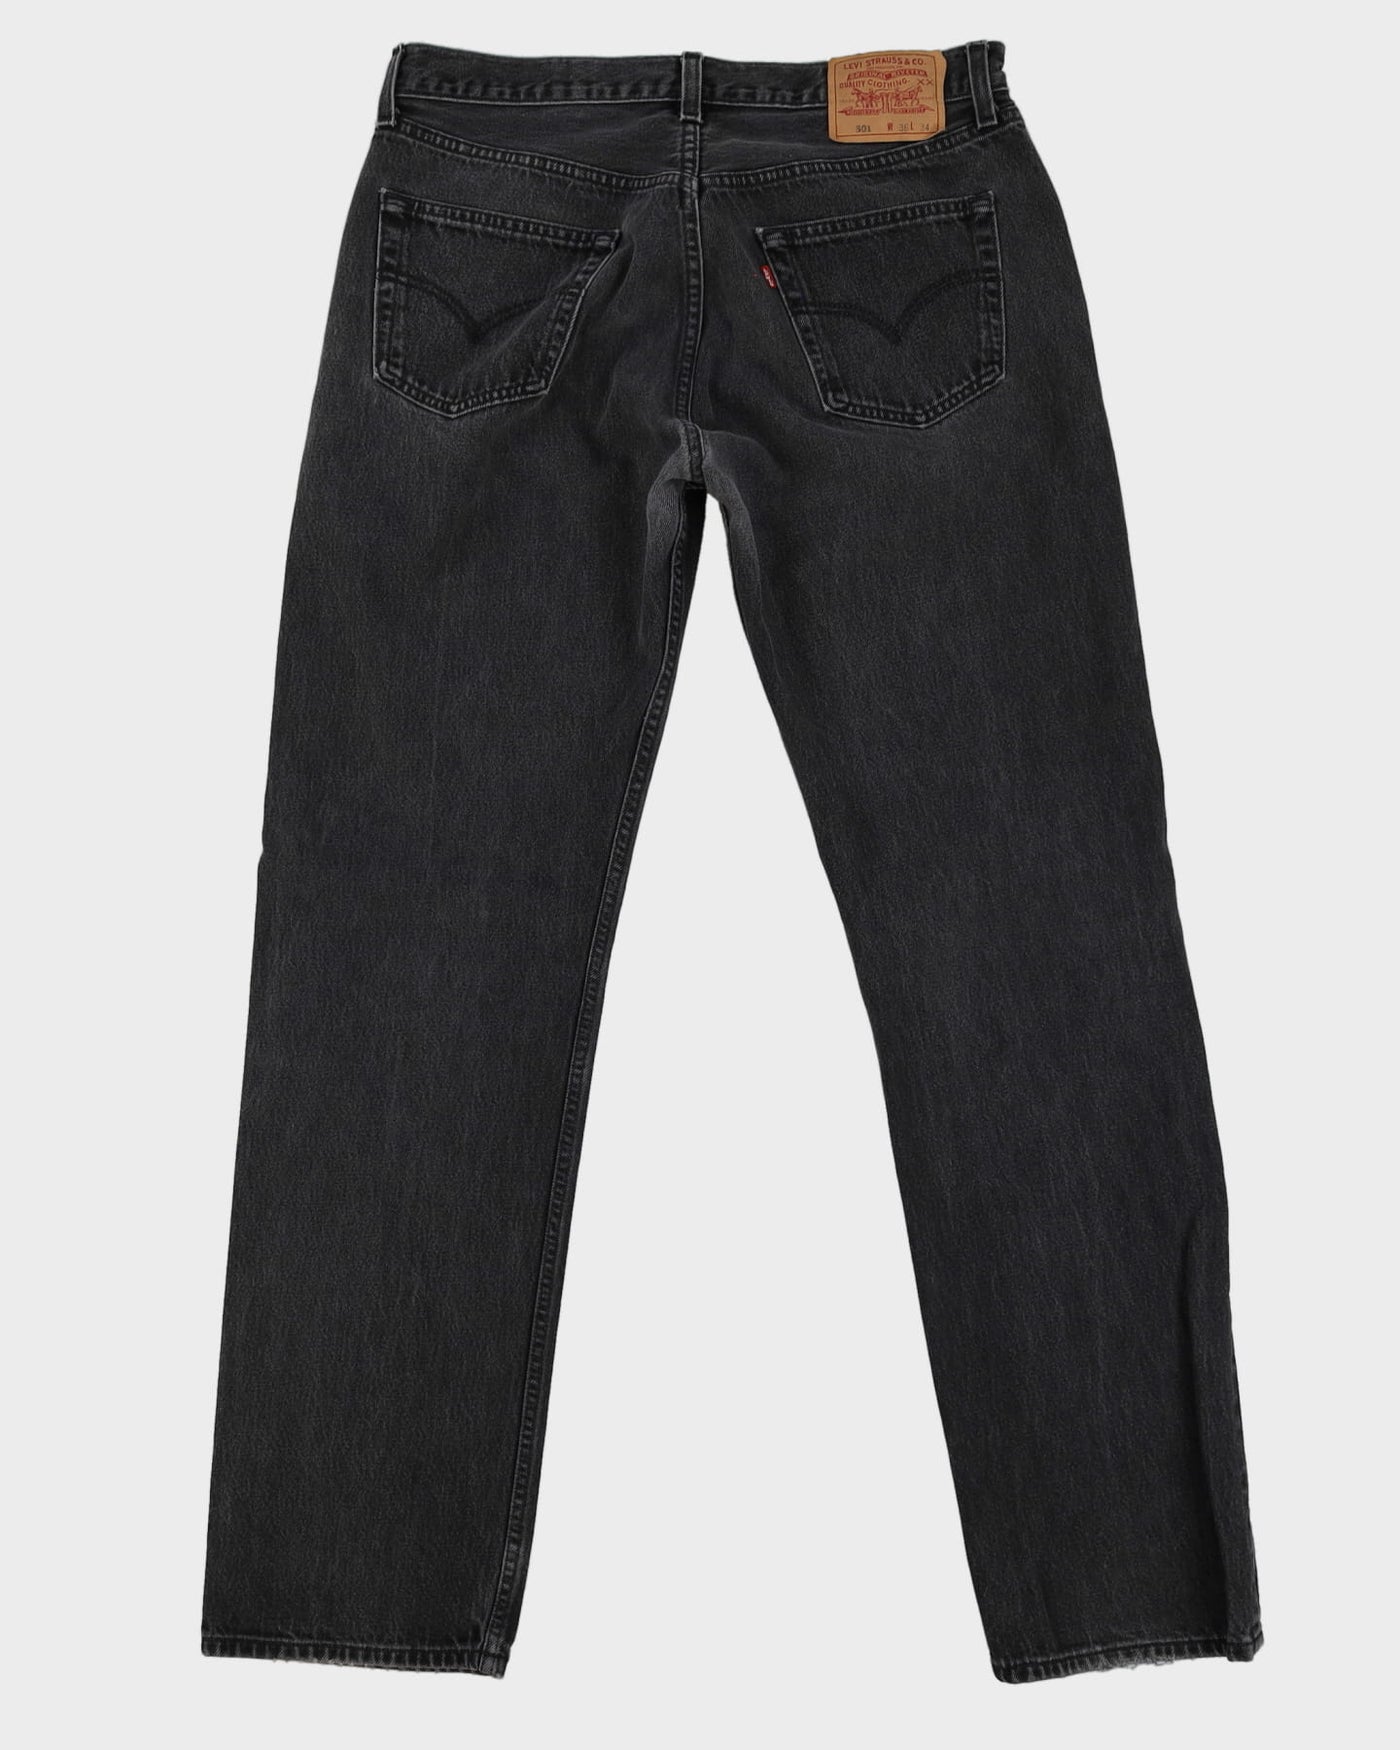 Vintage 90s Levi's 501 Dark Wash Black Jeans - W36 L34